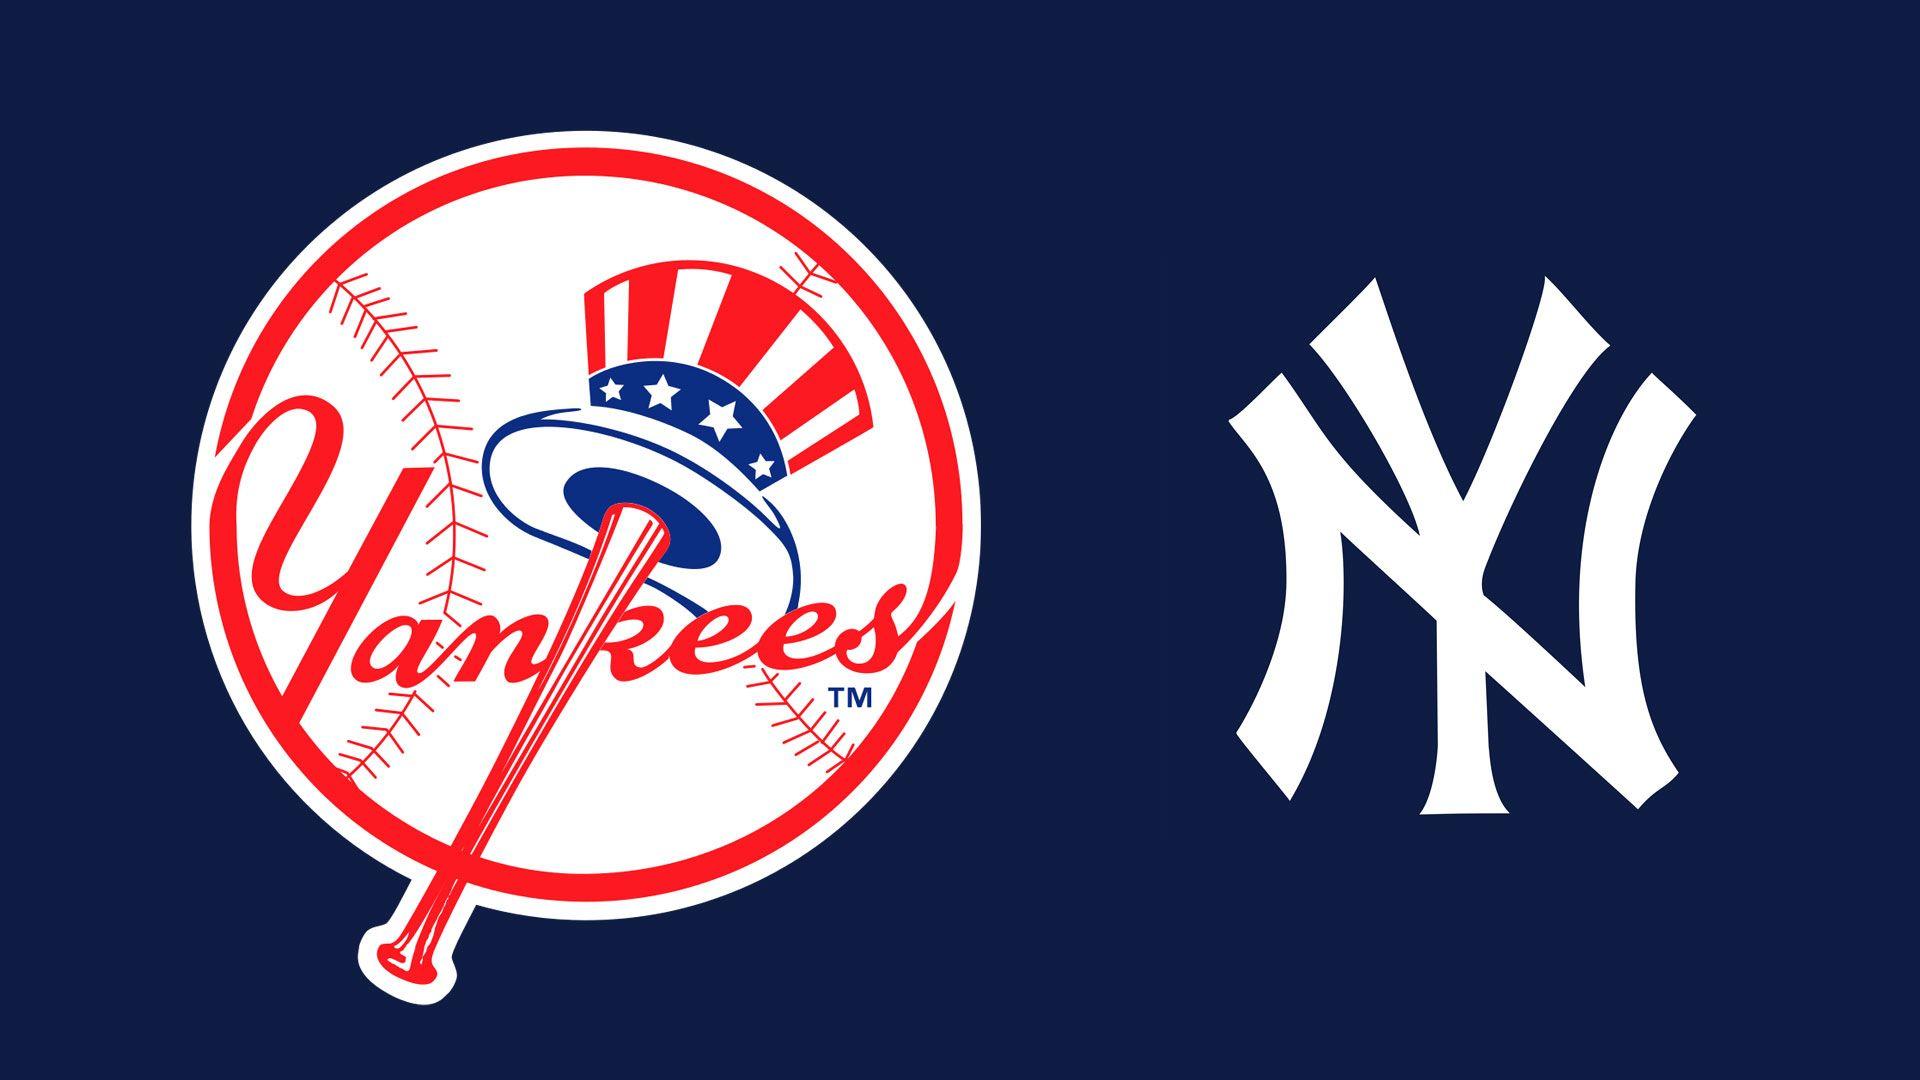 New York Yankees Wallpaper 50284 1920x1080 px